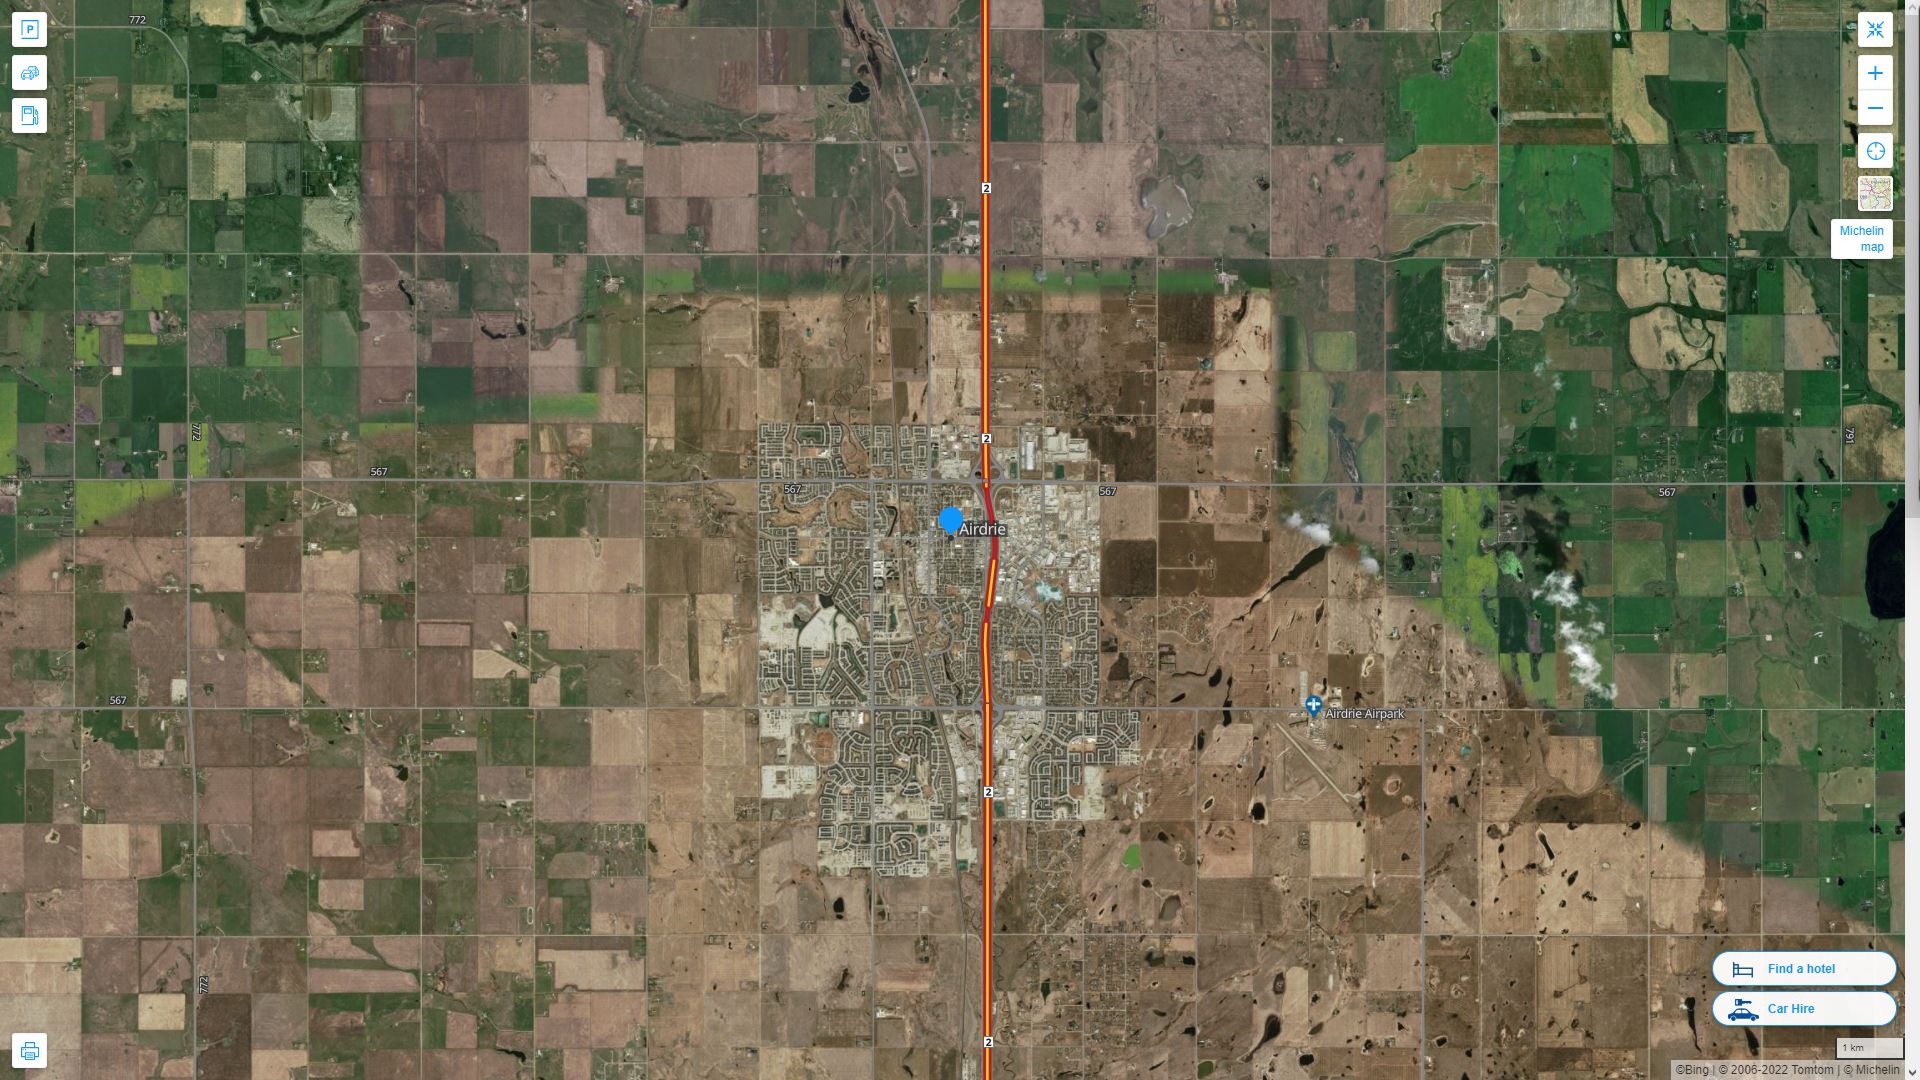 Airdrie Canada Autoroute et carte routiere avec vue satellite